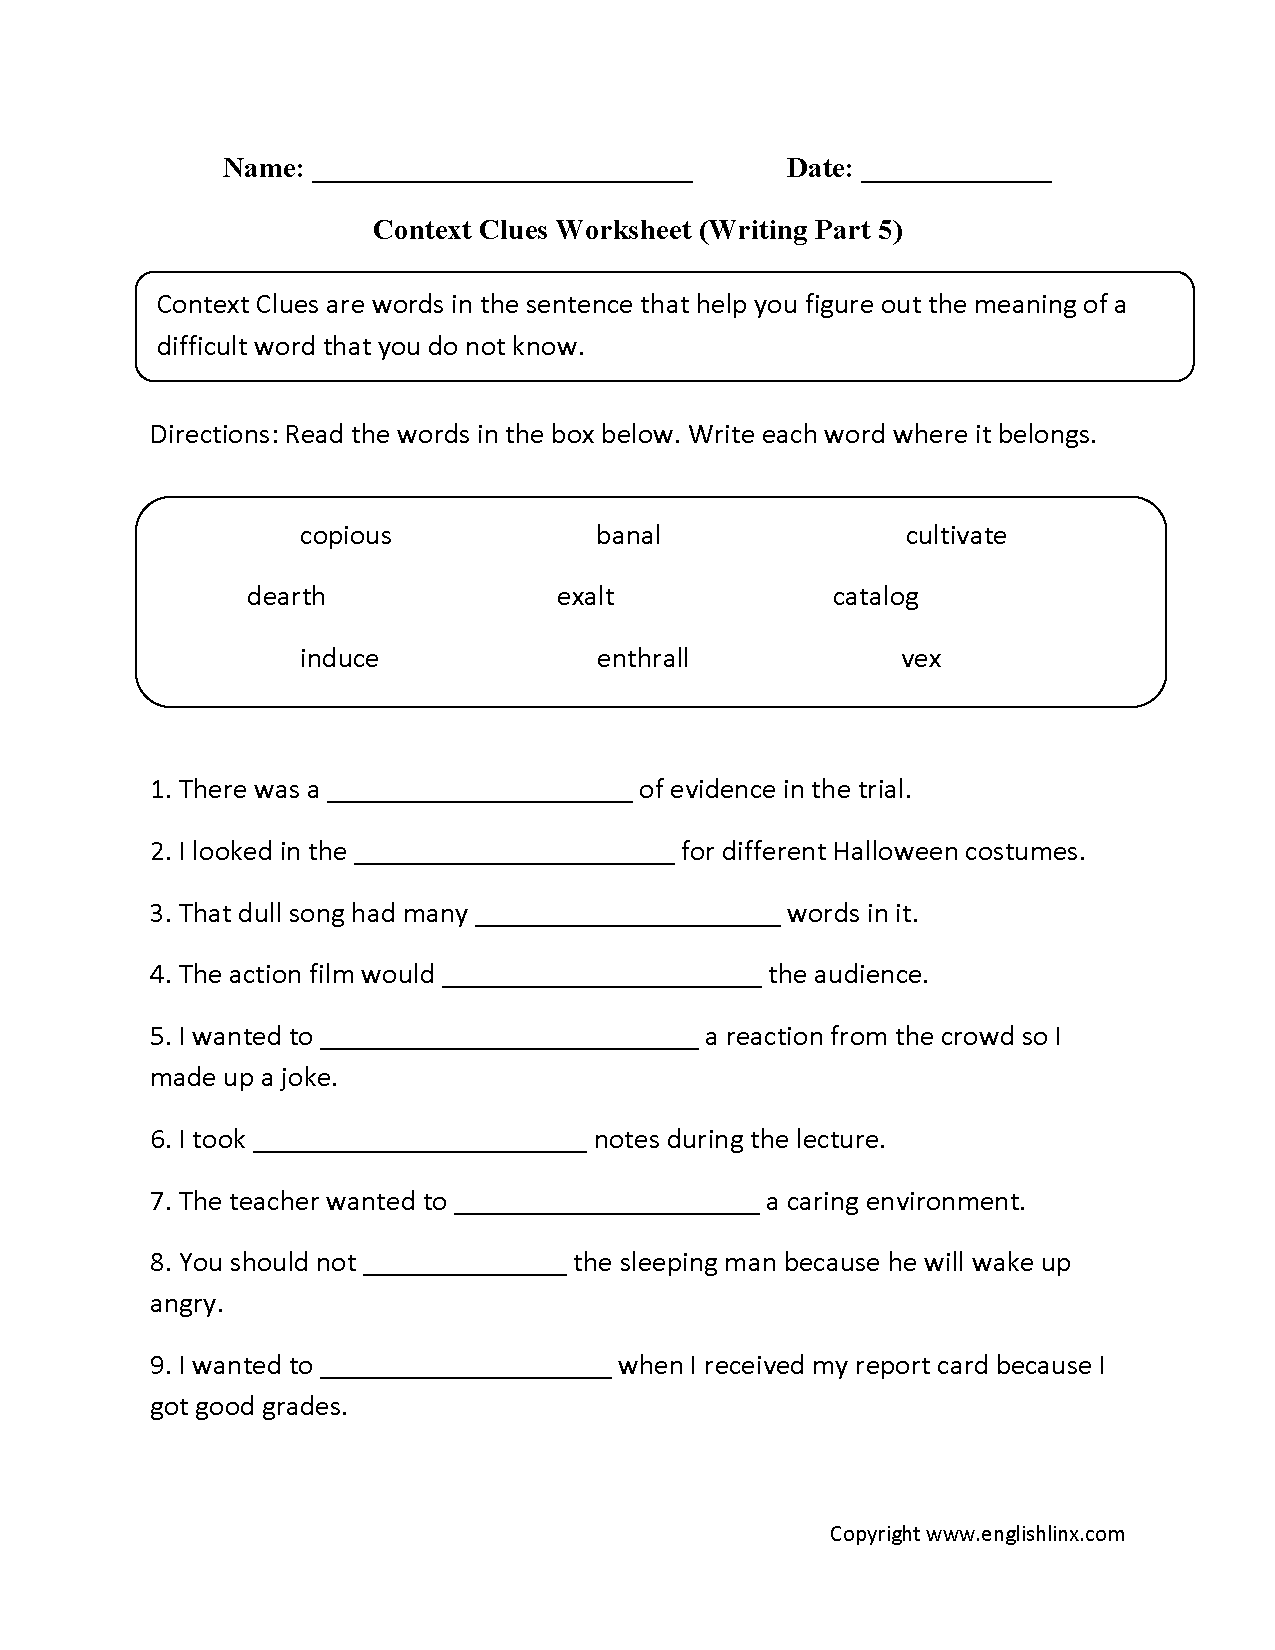 Context Clues Worksheets | Context Clues Worksheets Writing Part 5 Advanced